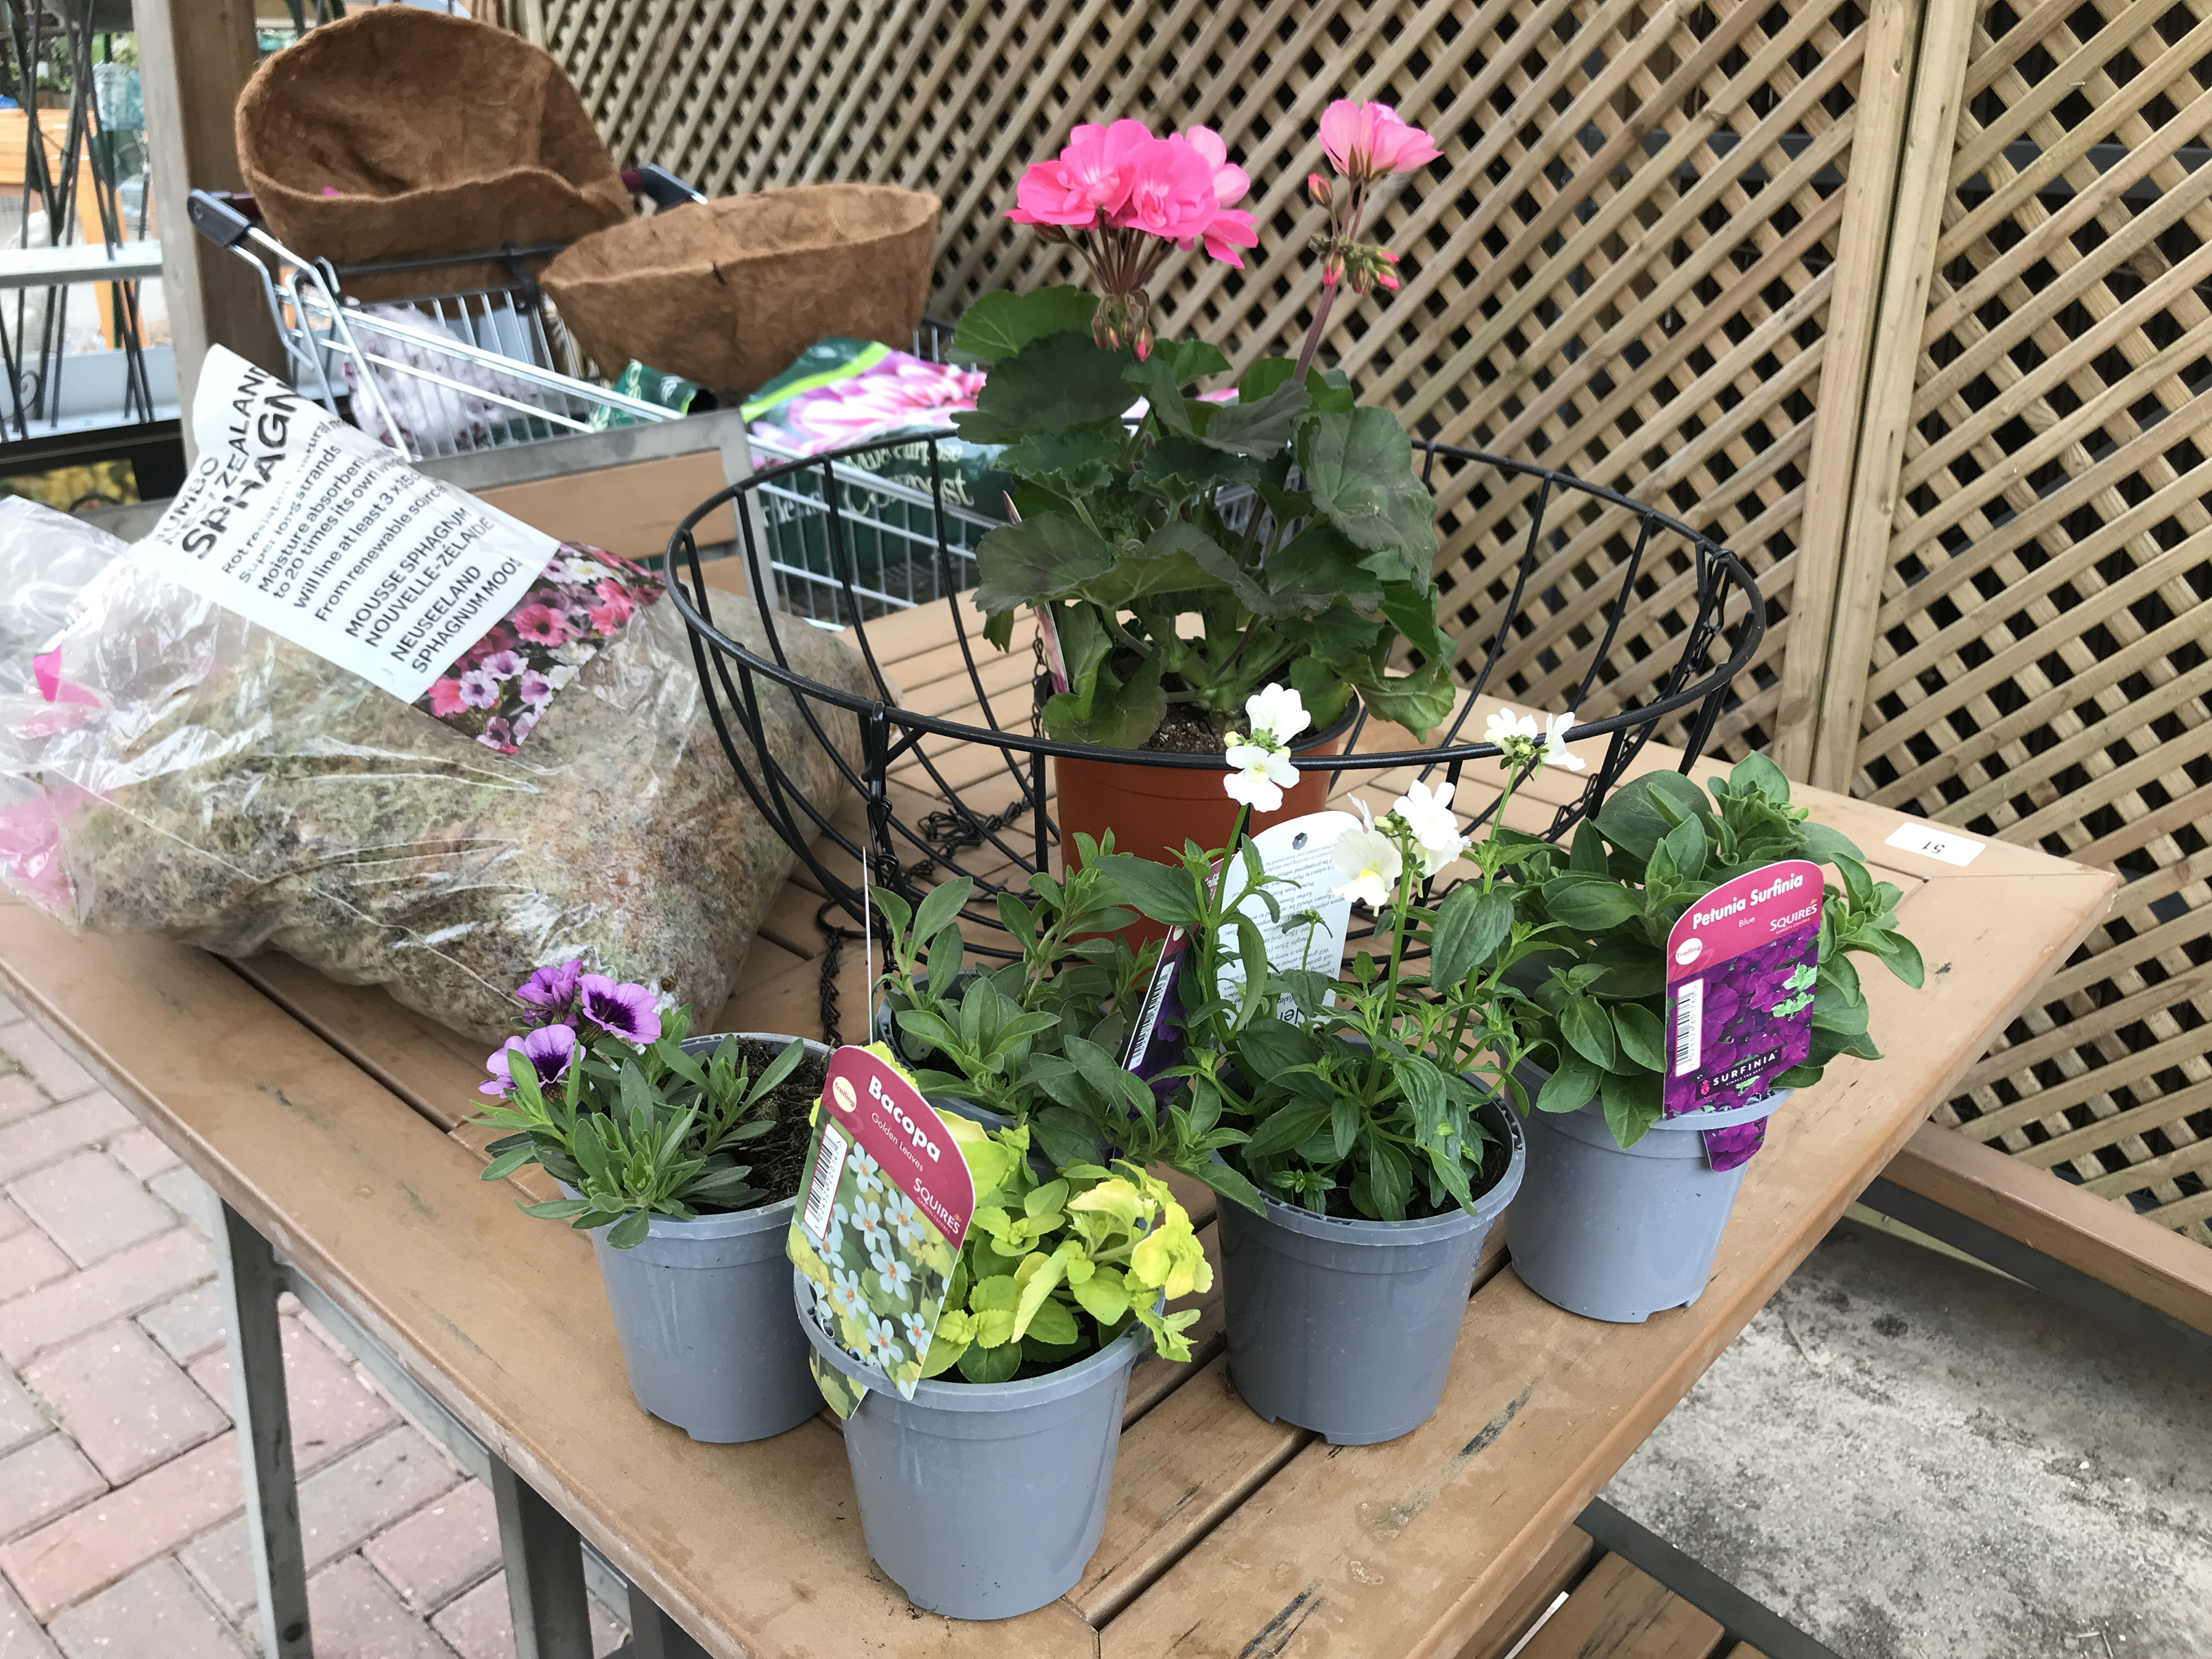 hanging basket plants and materials (Hannah Stephenson/PA)